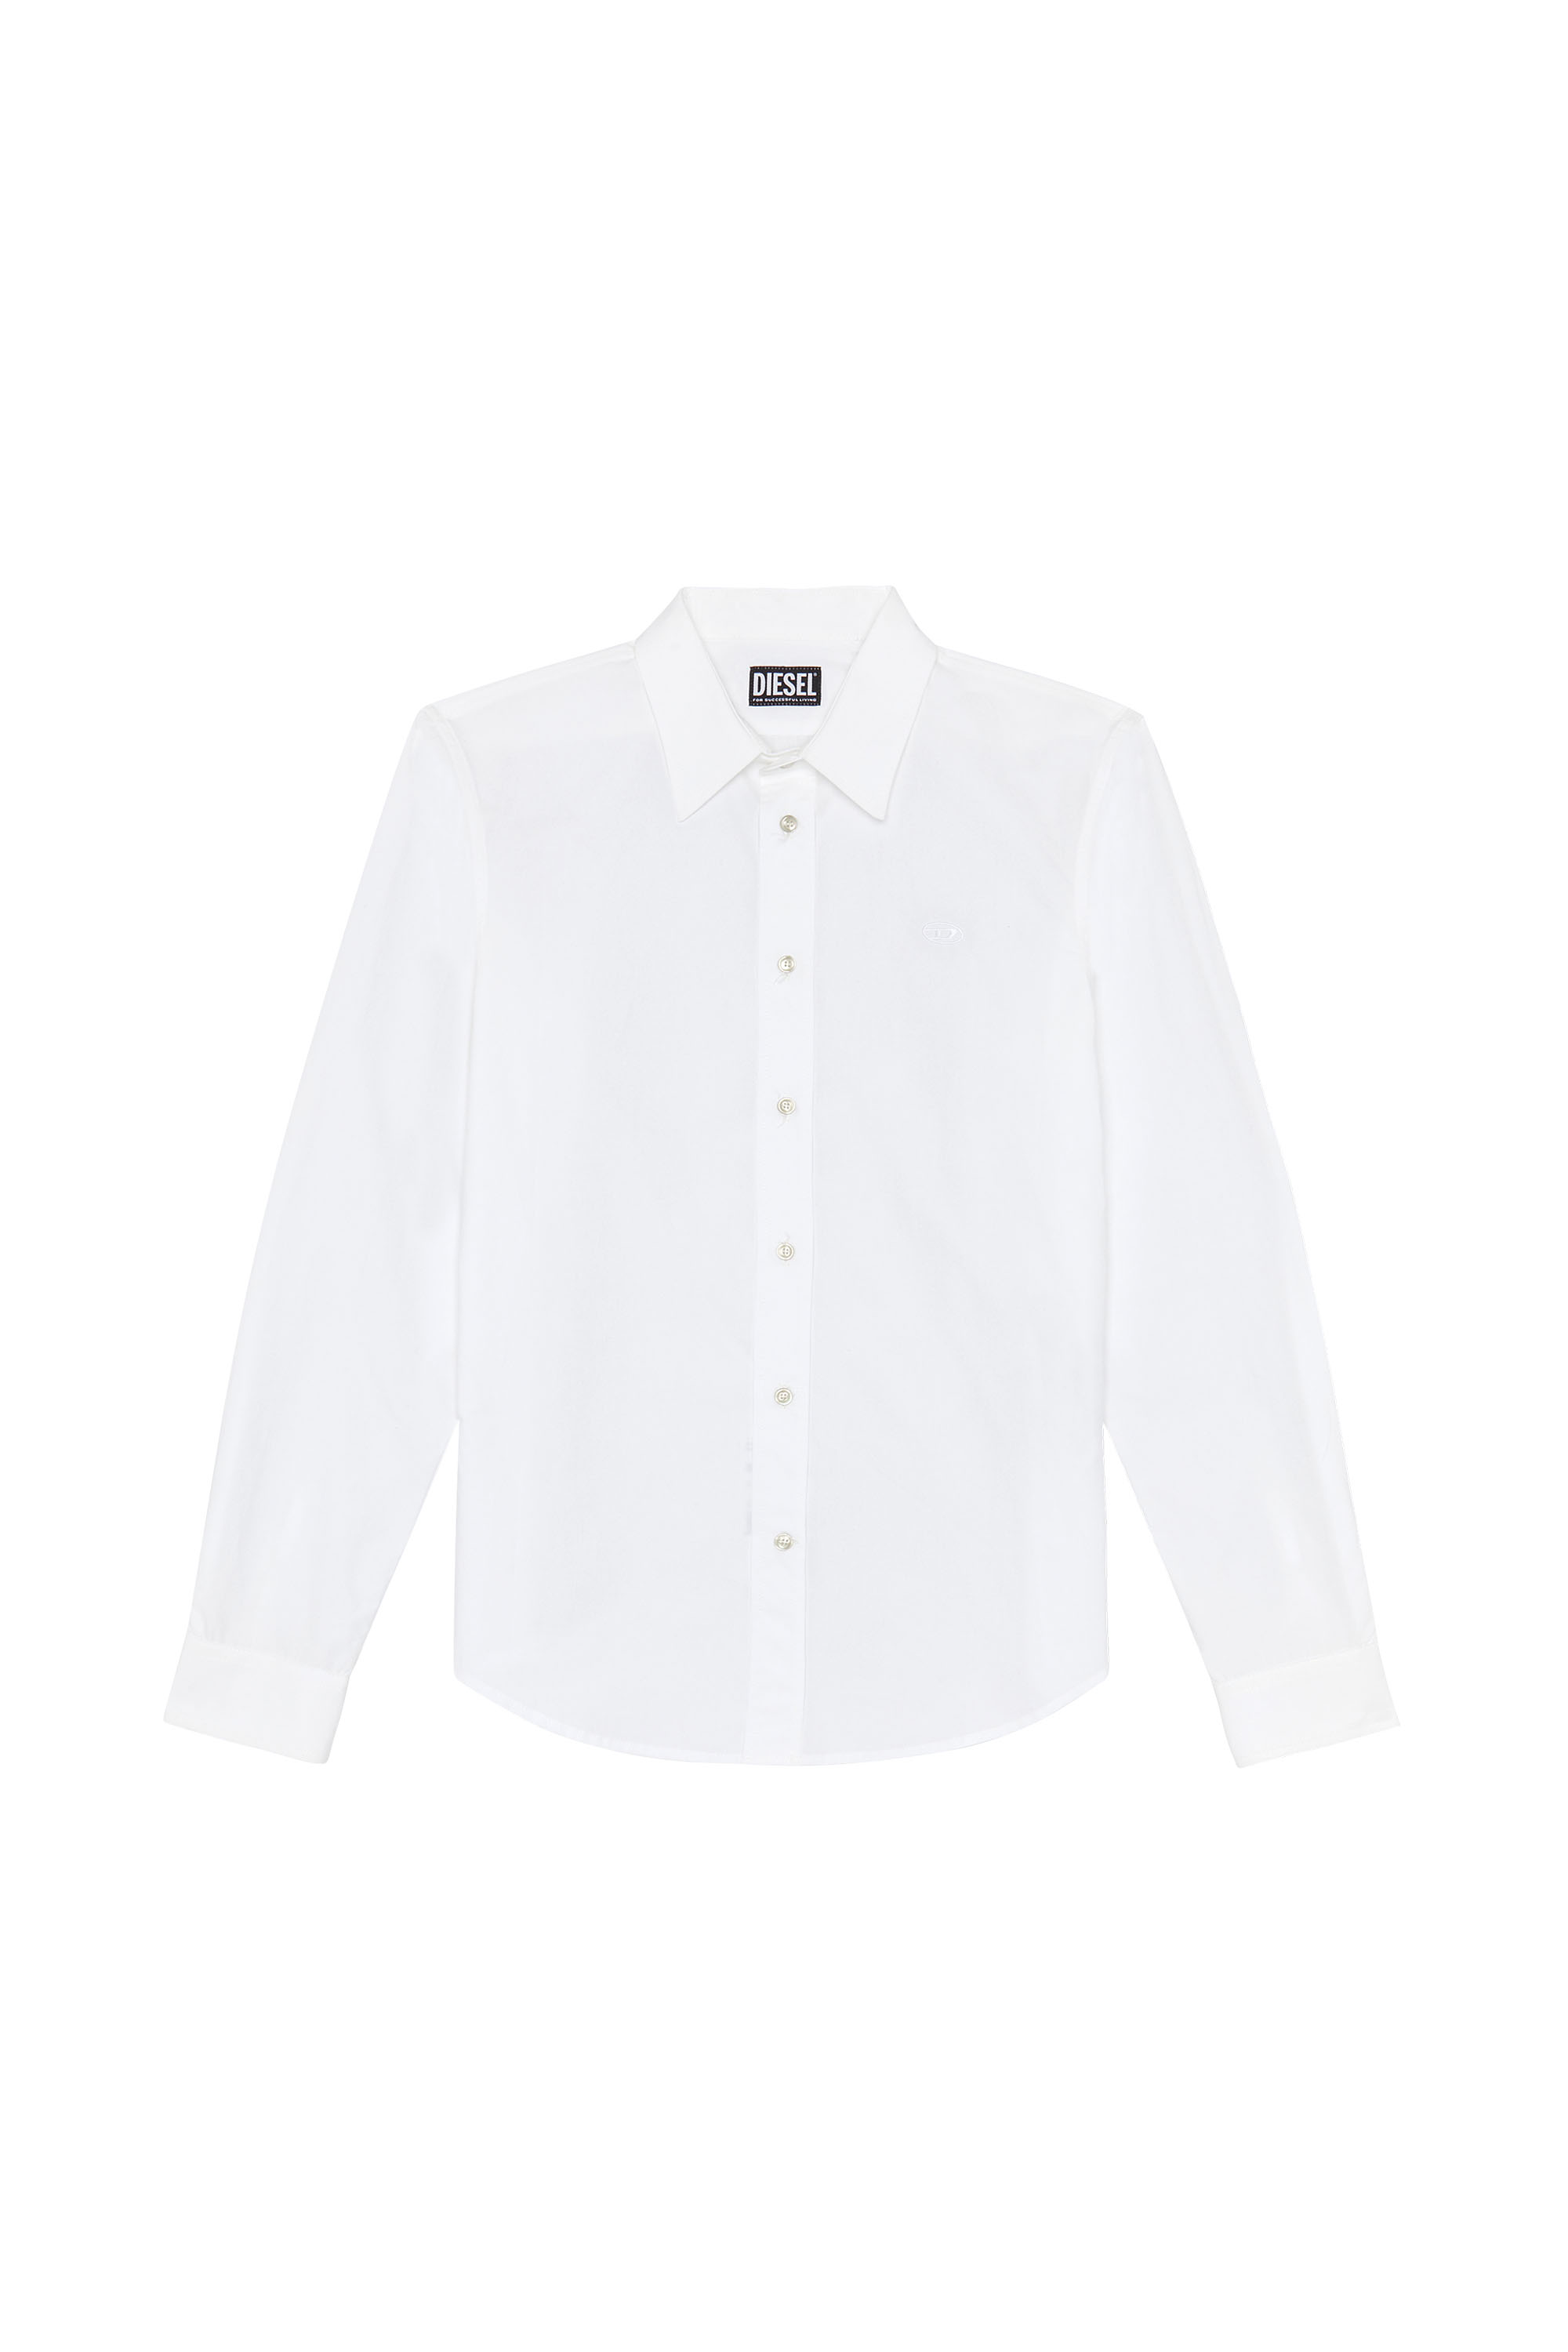 Diesel - S-BEN-CL, Man Shirt in technical cotton in White - Image 3